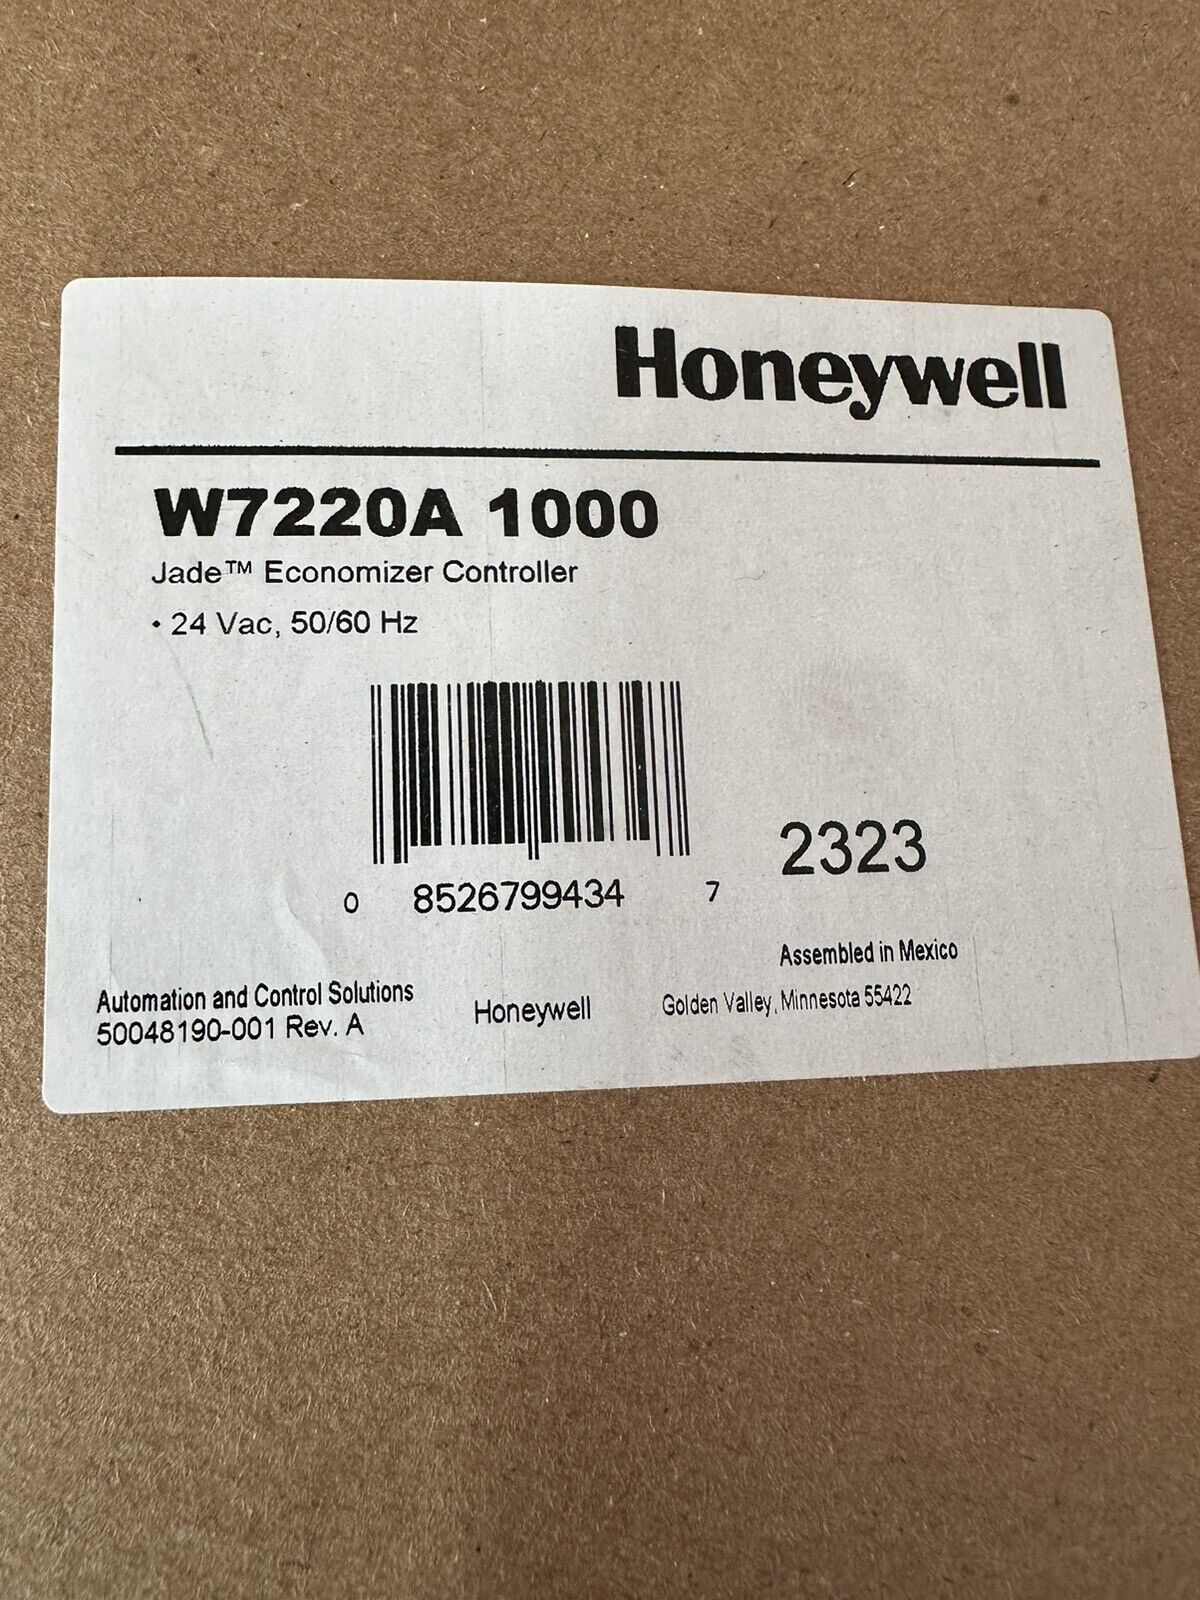 Honeywell W7220A1000 Jade Economizer Controller